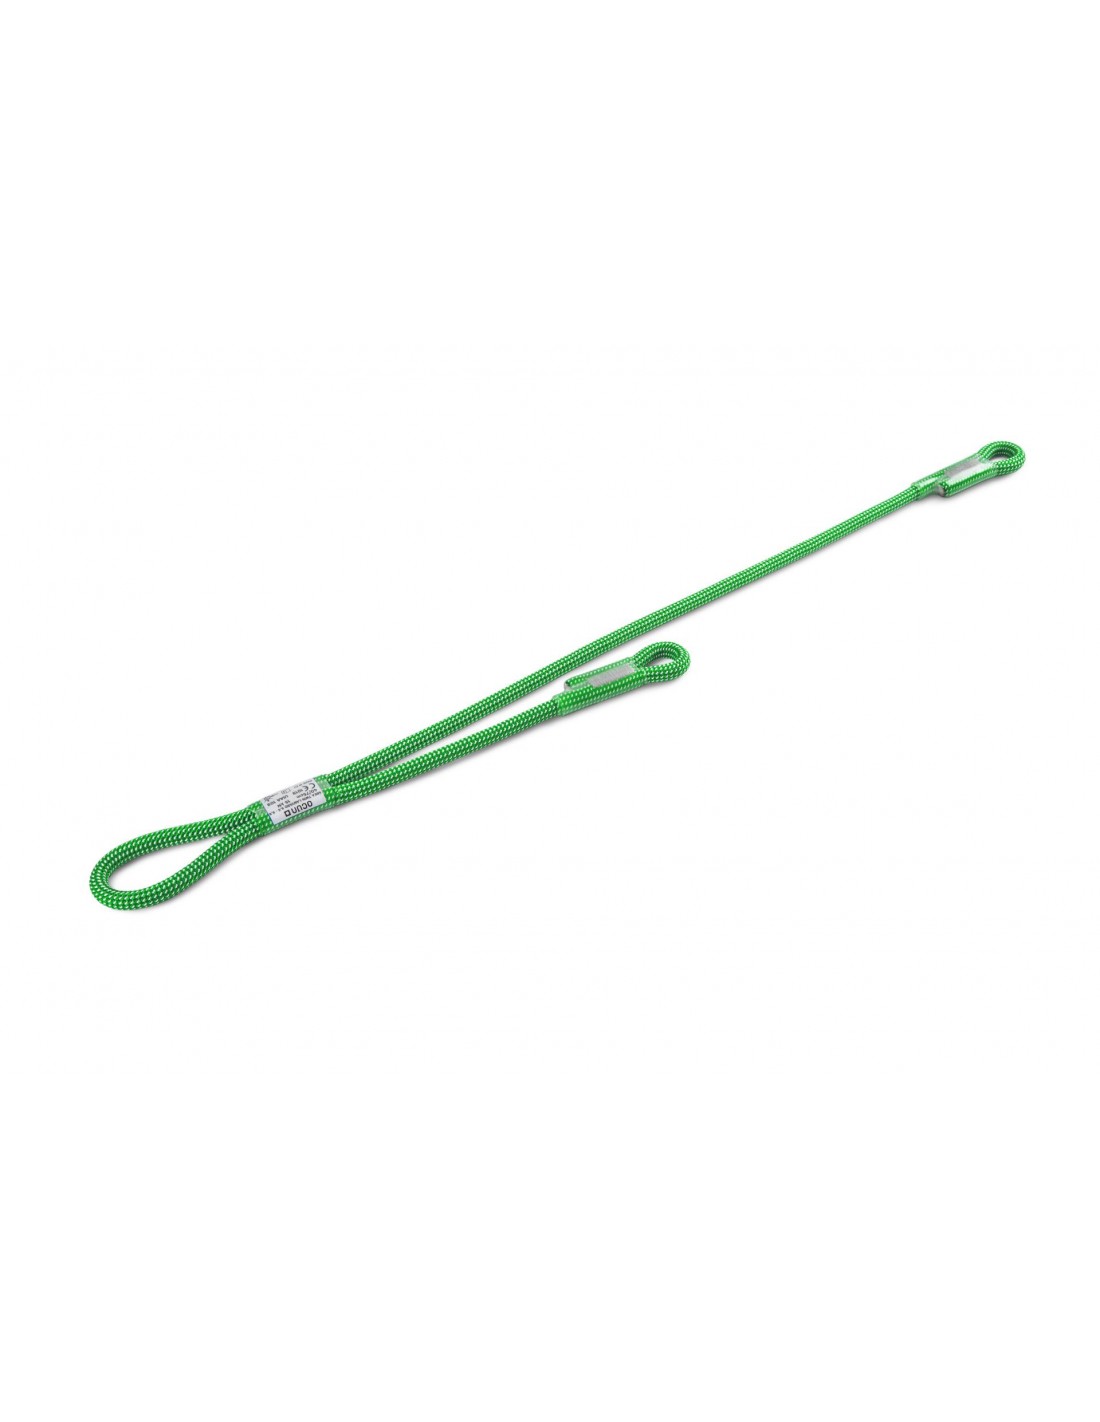 Ocun Sicherungsschlinge SBEA TWIN LANYARD 9,5-9,8 mm 40/75 cm, green Bandart - Standplatzschlinge, Bandlänge - 75 cm, von Ocun